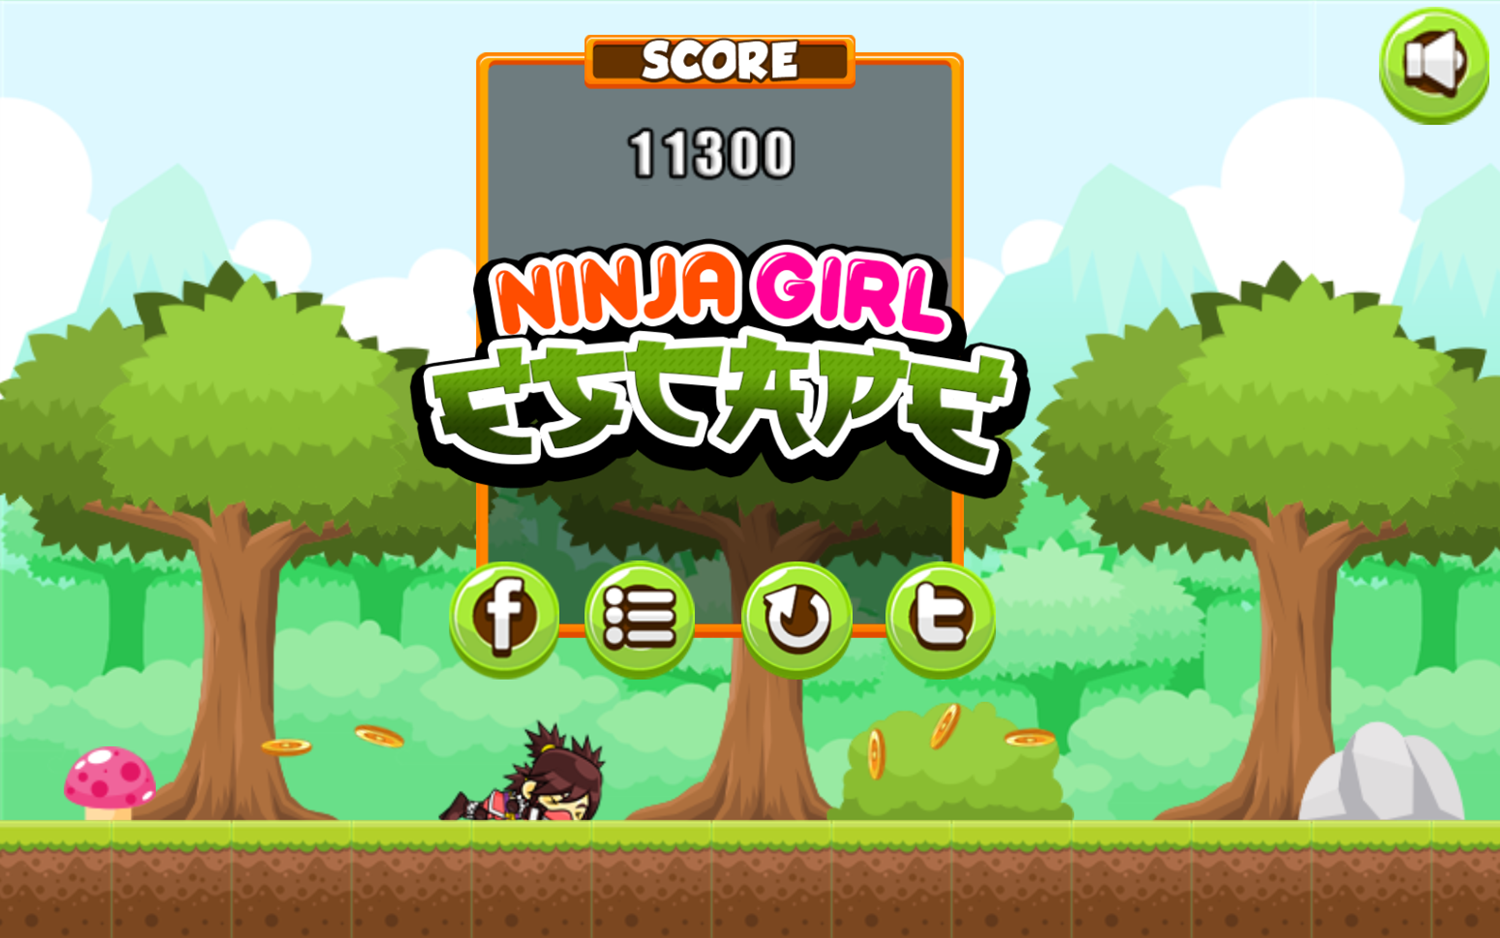 Ninja Girl Escape Game Score Screenshot.